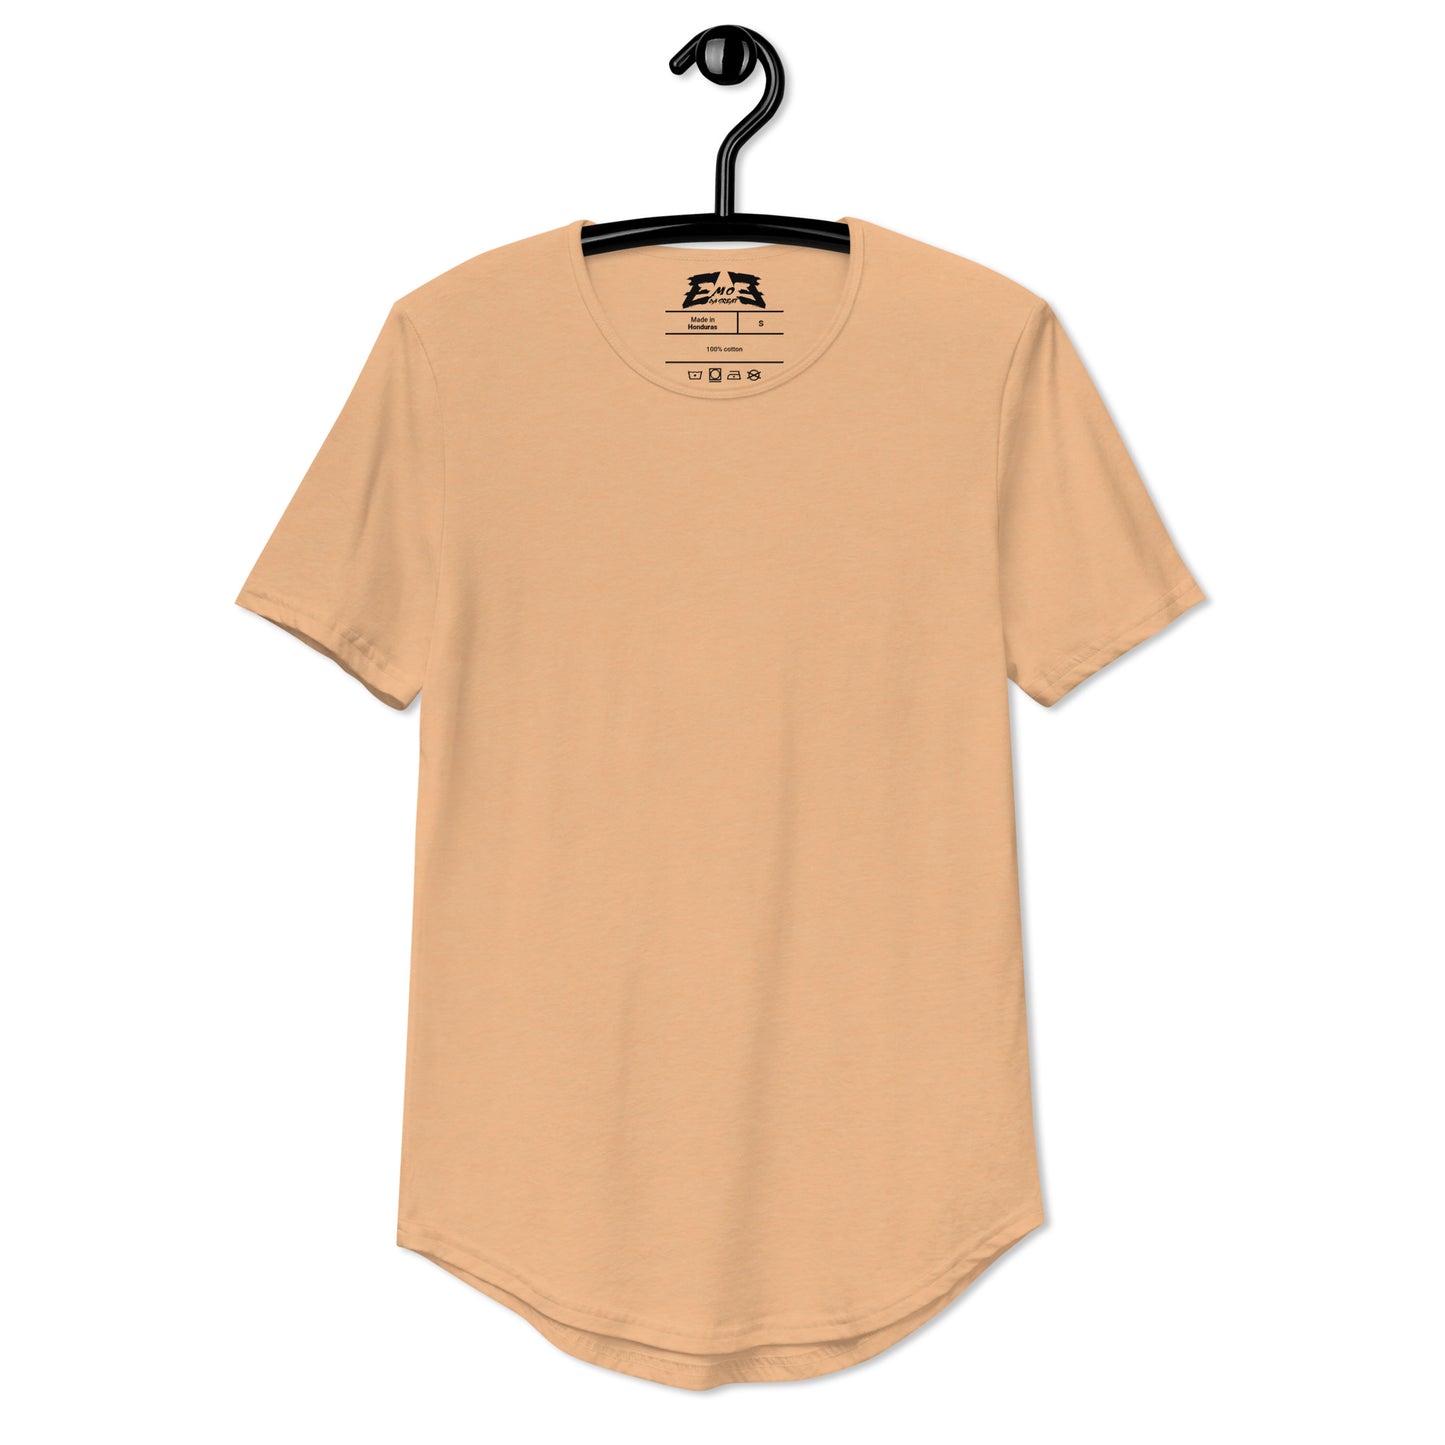 EMOEDAGREAT Men's Curved Hem T-Shirt